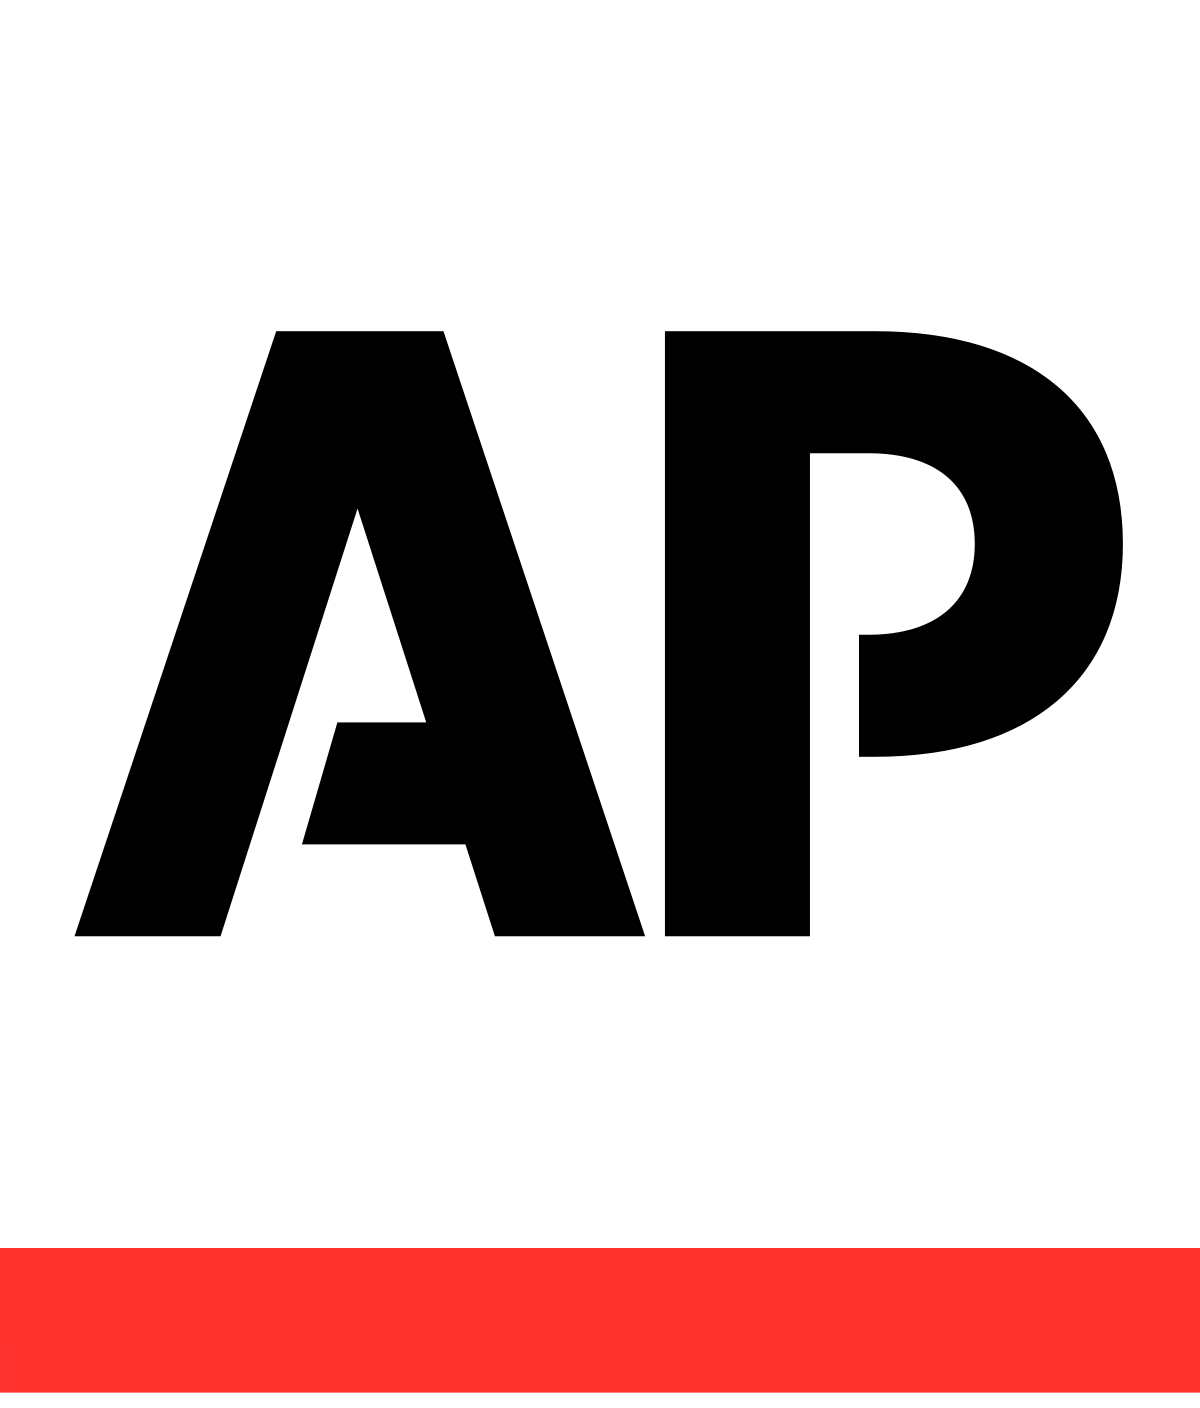 Massachusetts lawmakers OK sweeping abortion access bill | Associated Press | July 26, 2022